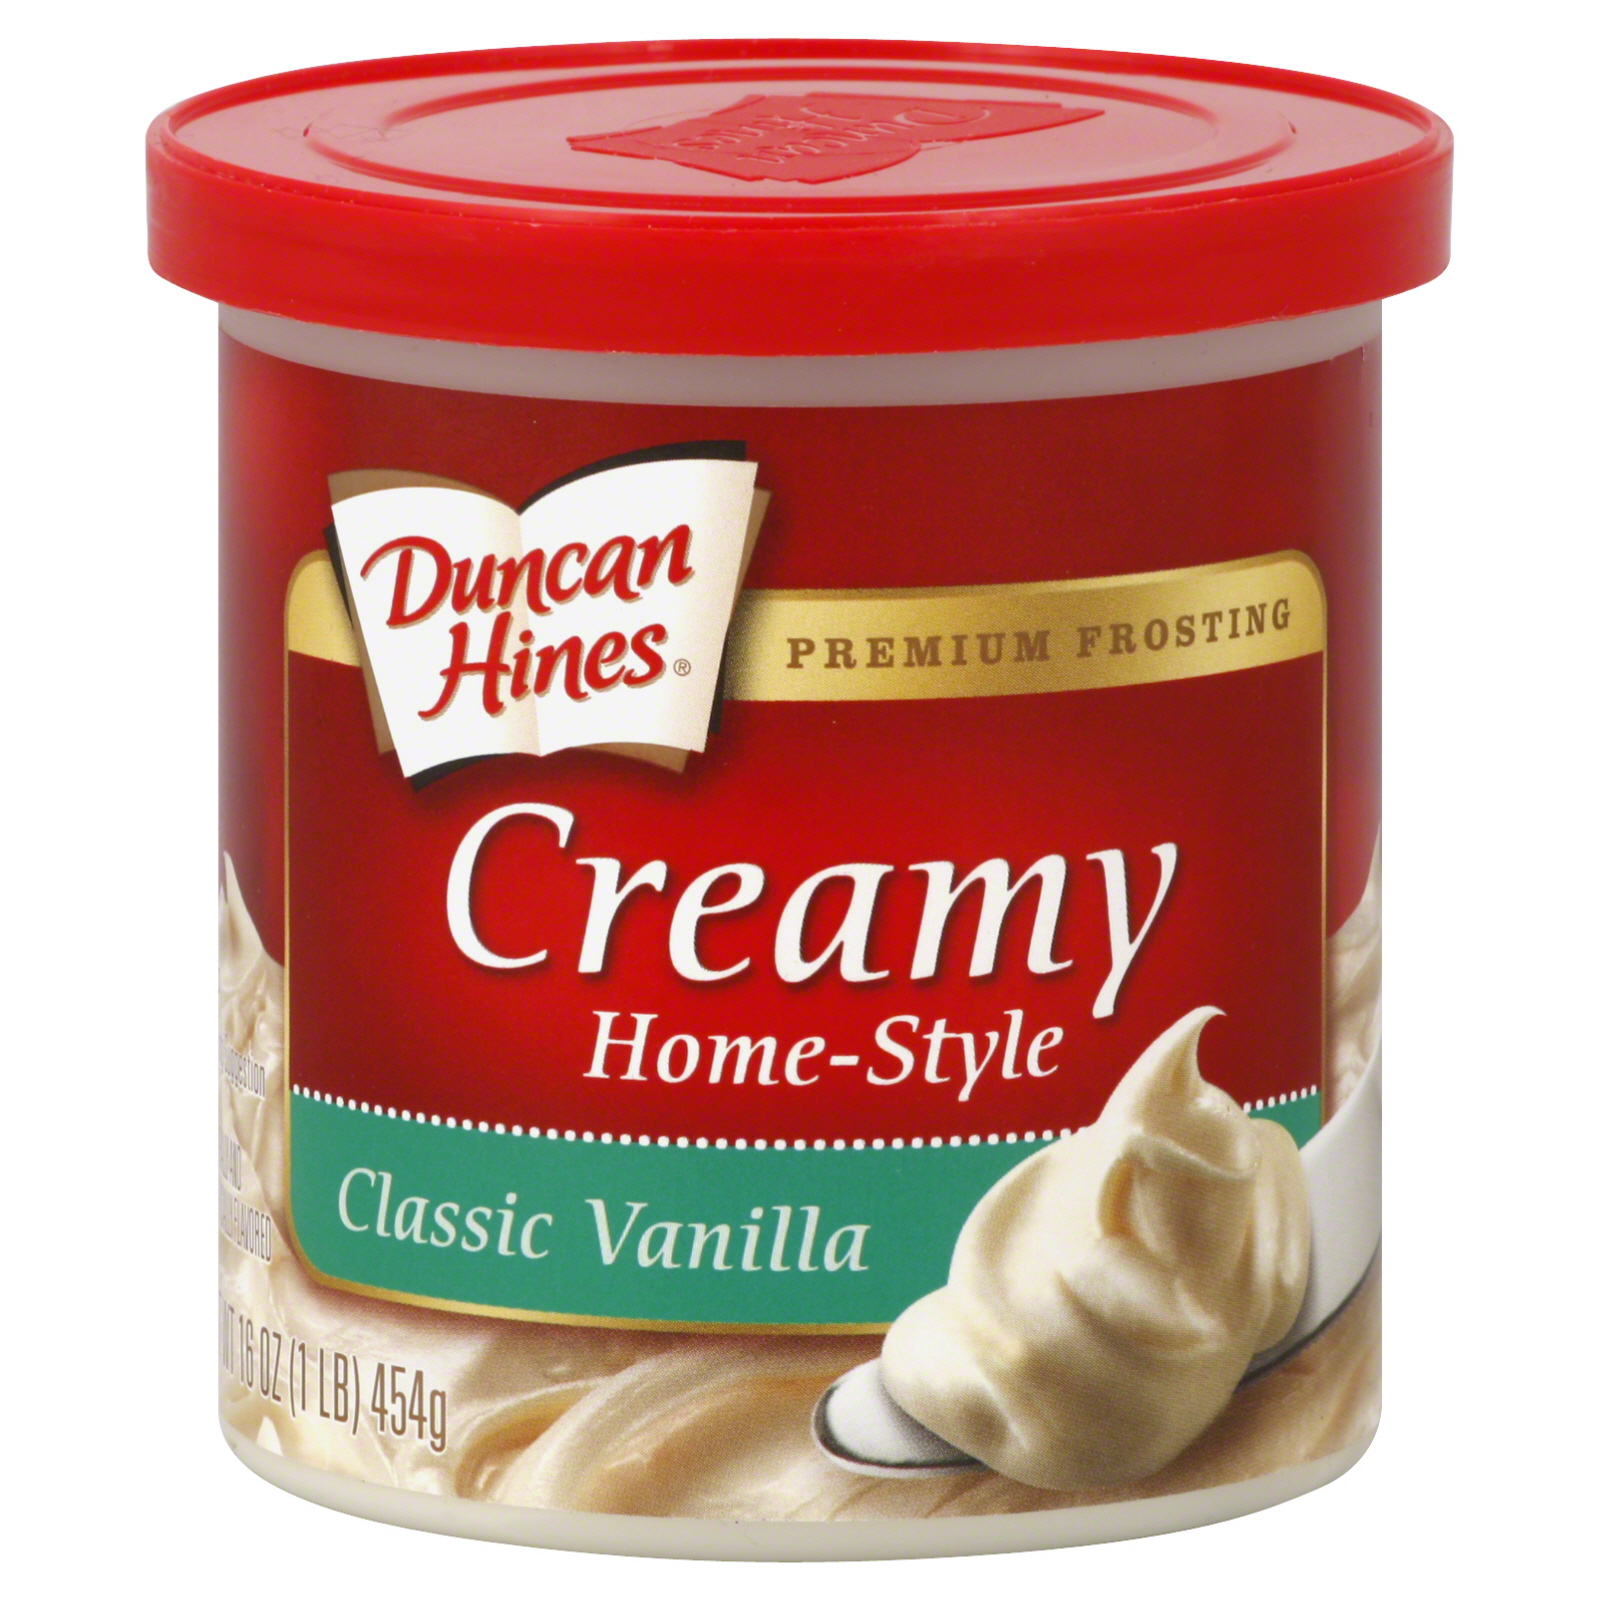 Duncan Hines Creamy Home-Style Frosting, Premium, Classic Vanilla, 16 oz (1 lb) 454 g